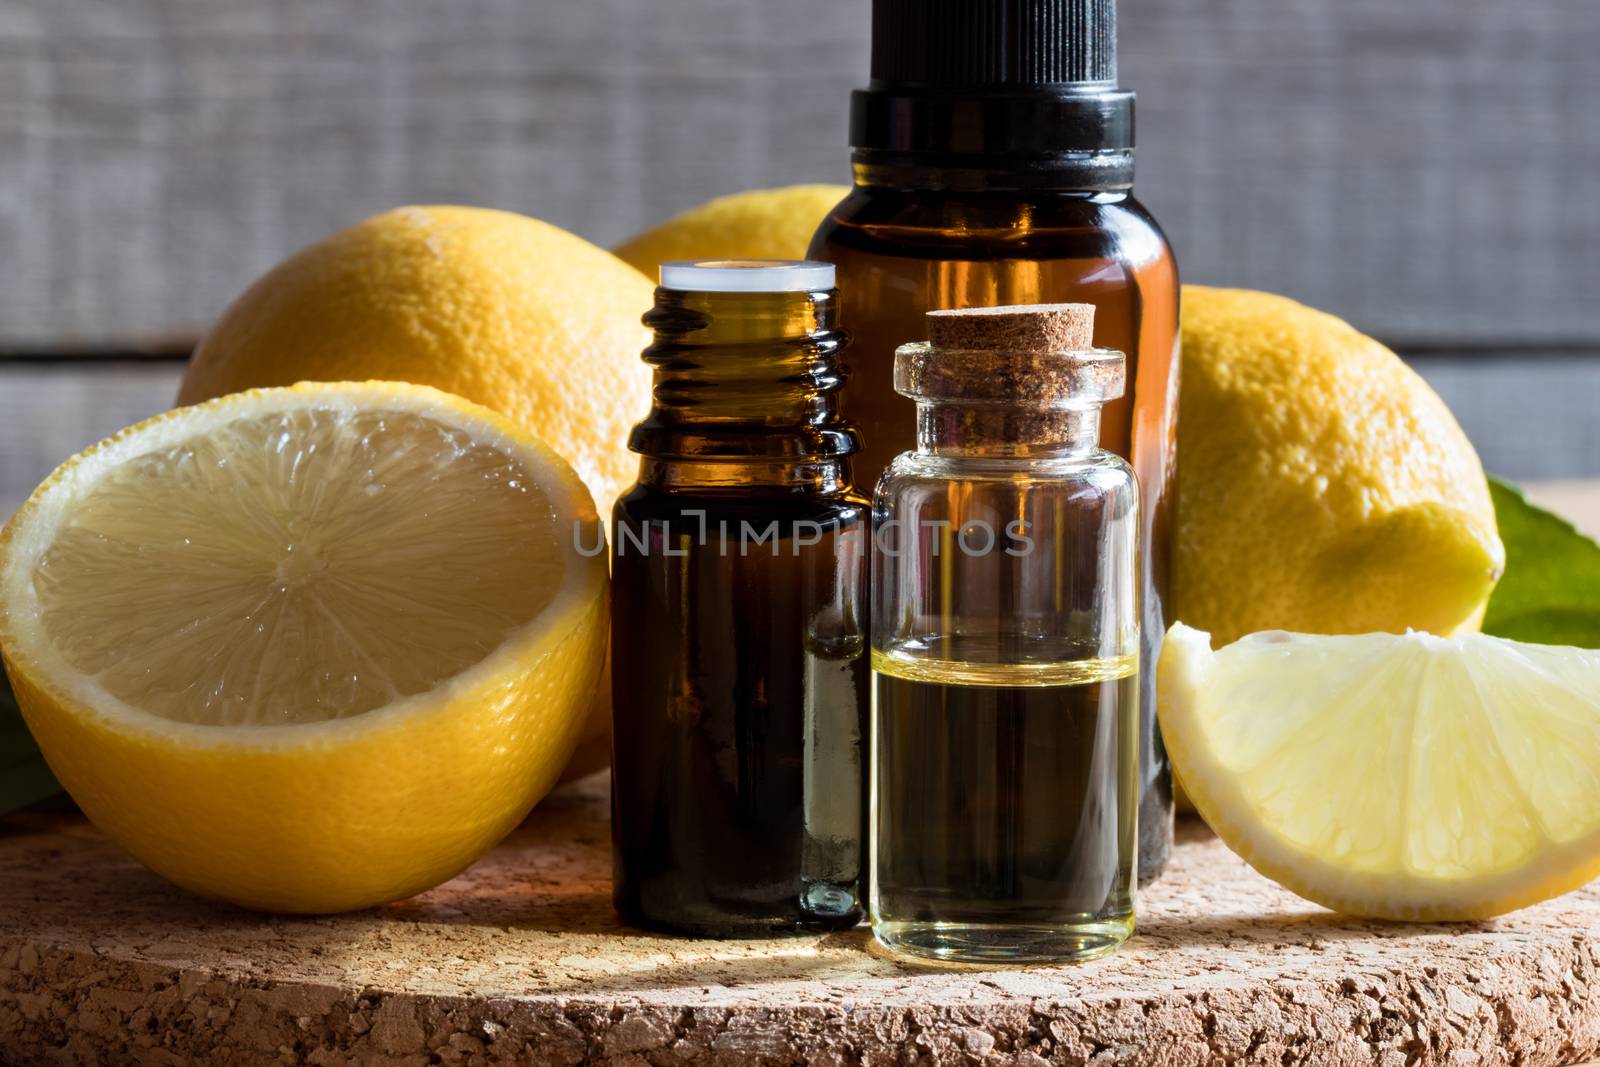 Bottles of lemon essential oil with lemons in the background